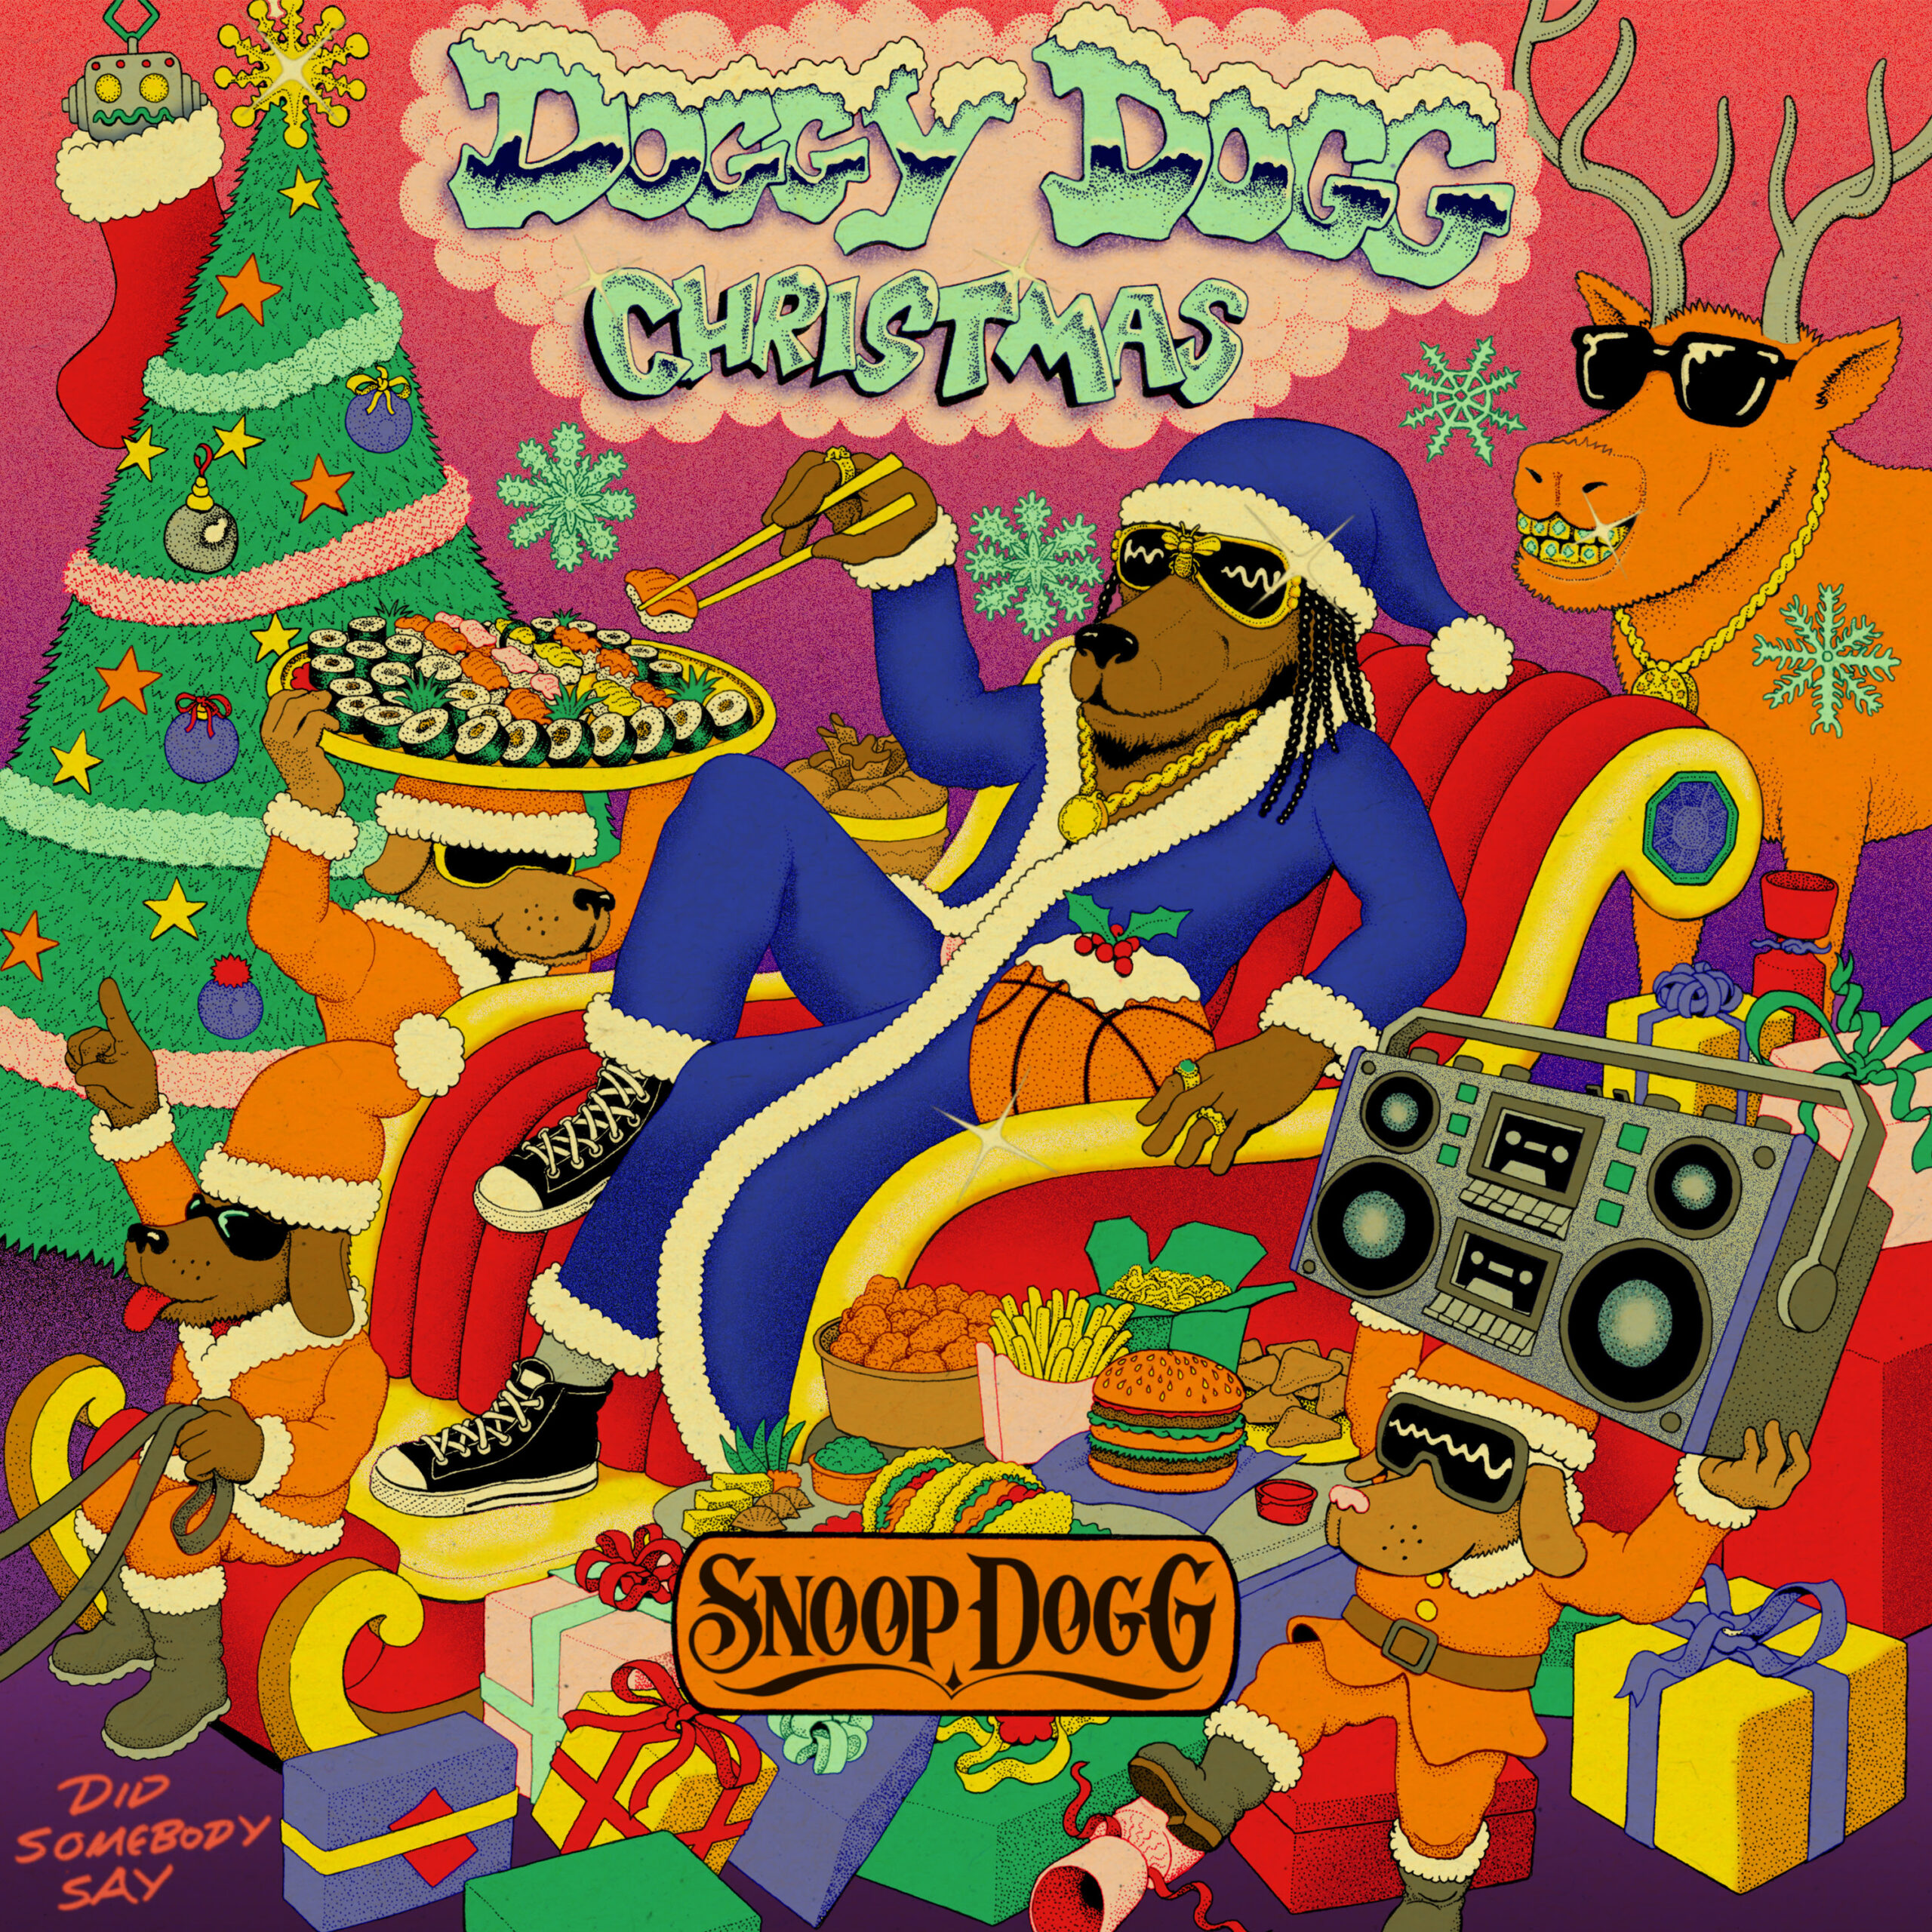 Snoop Dogg Gets Festive With “Doggy Dogg Christmas”